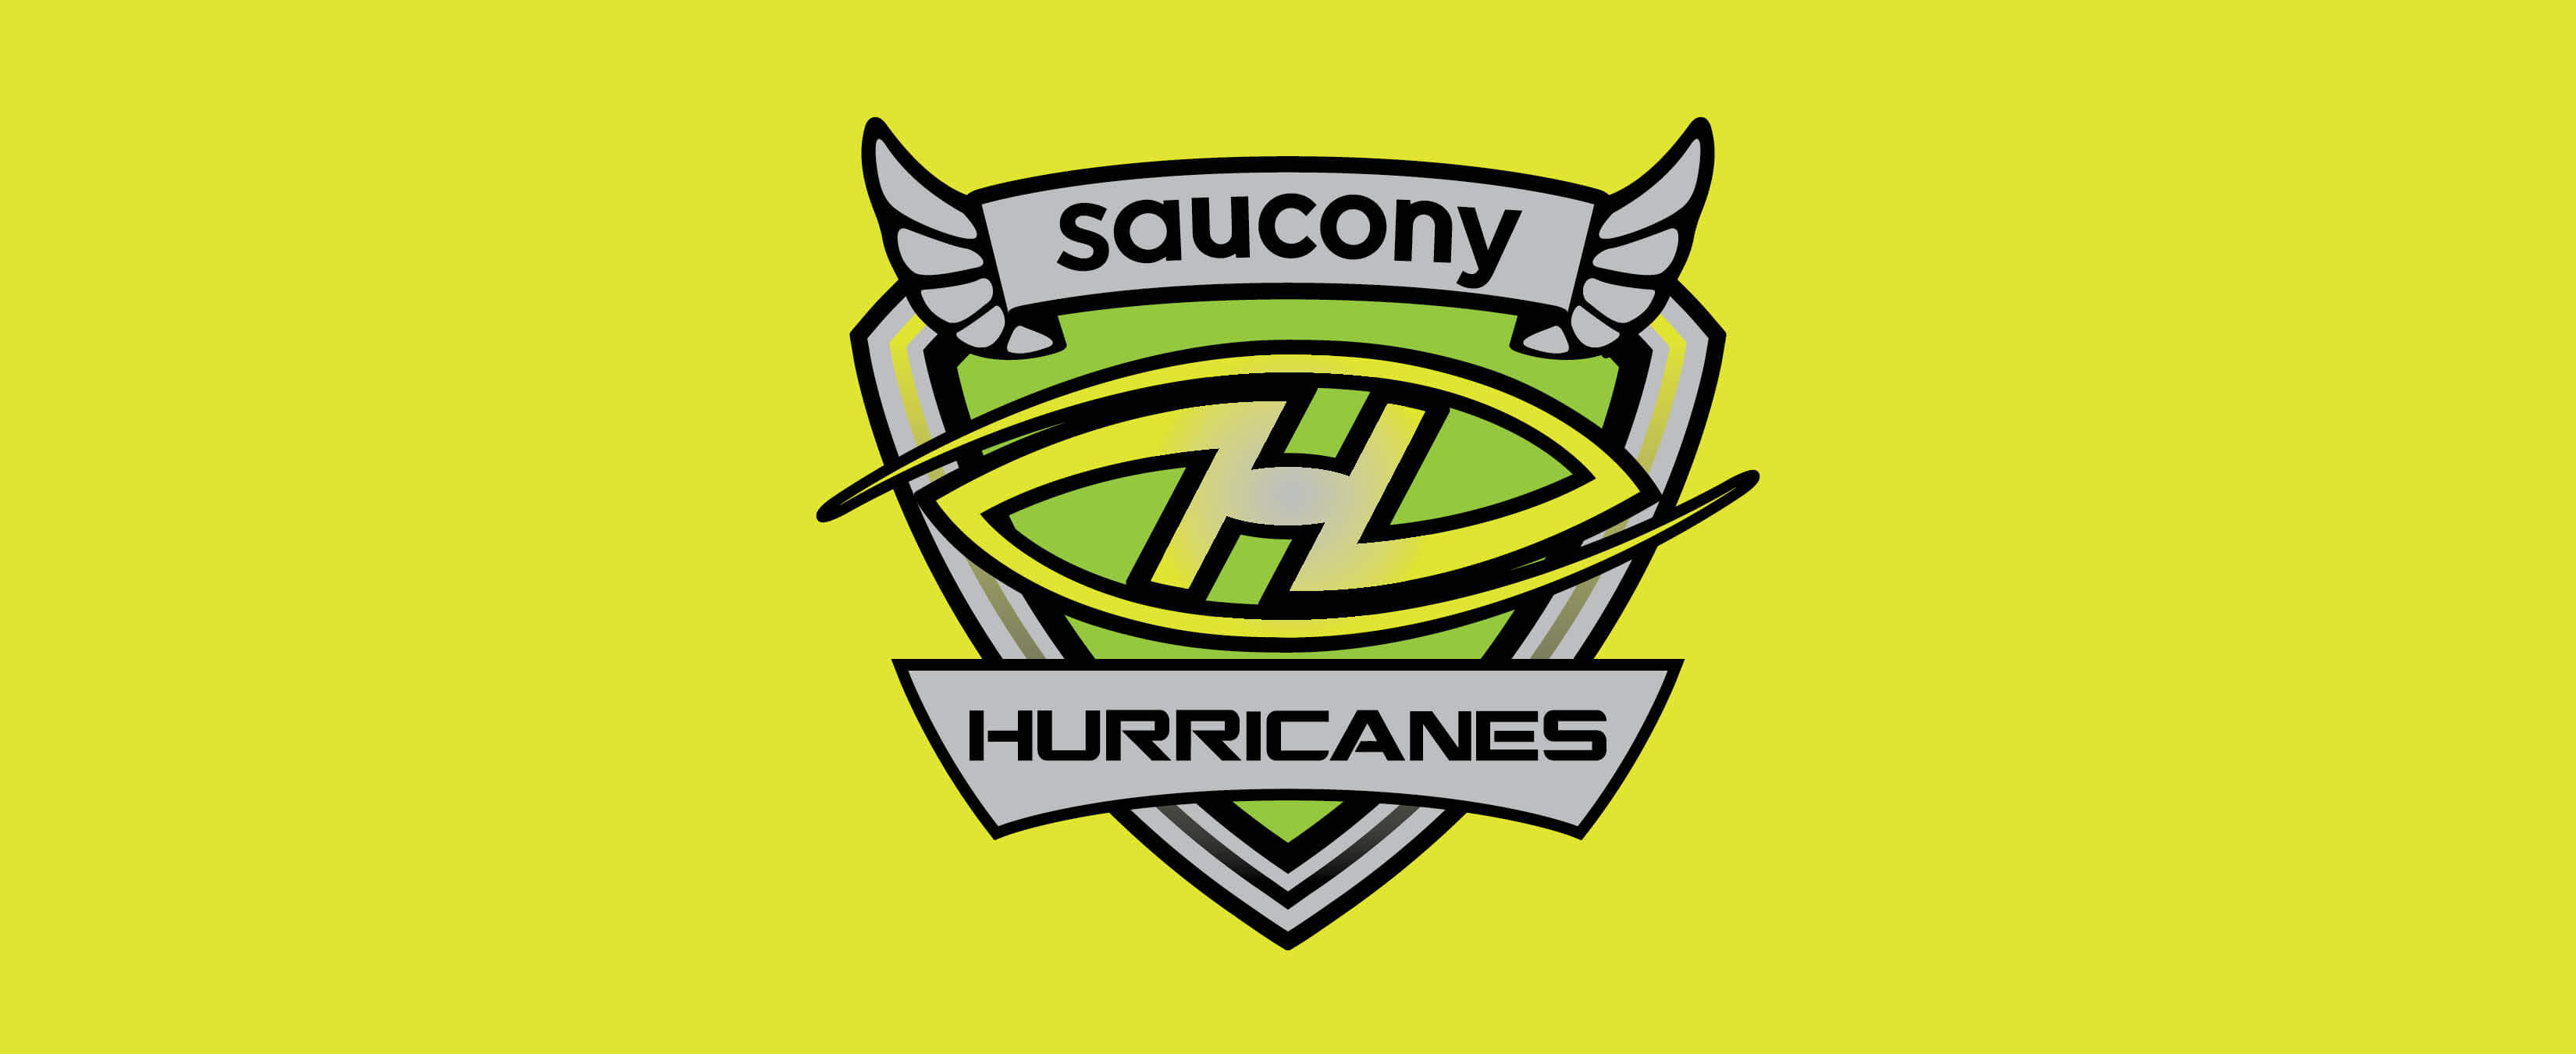 saucony hurricane team application 2016